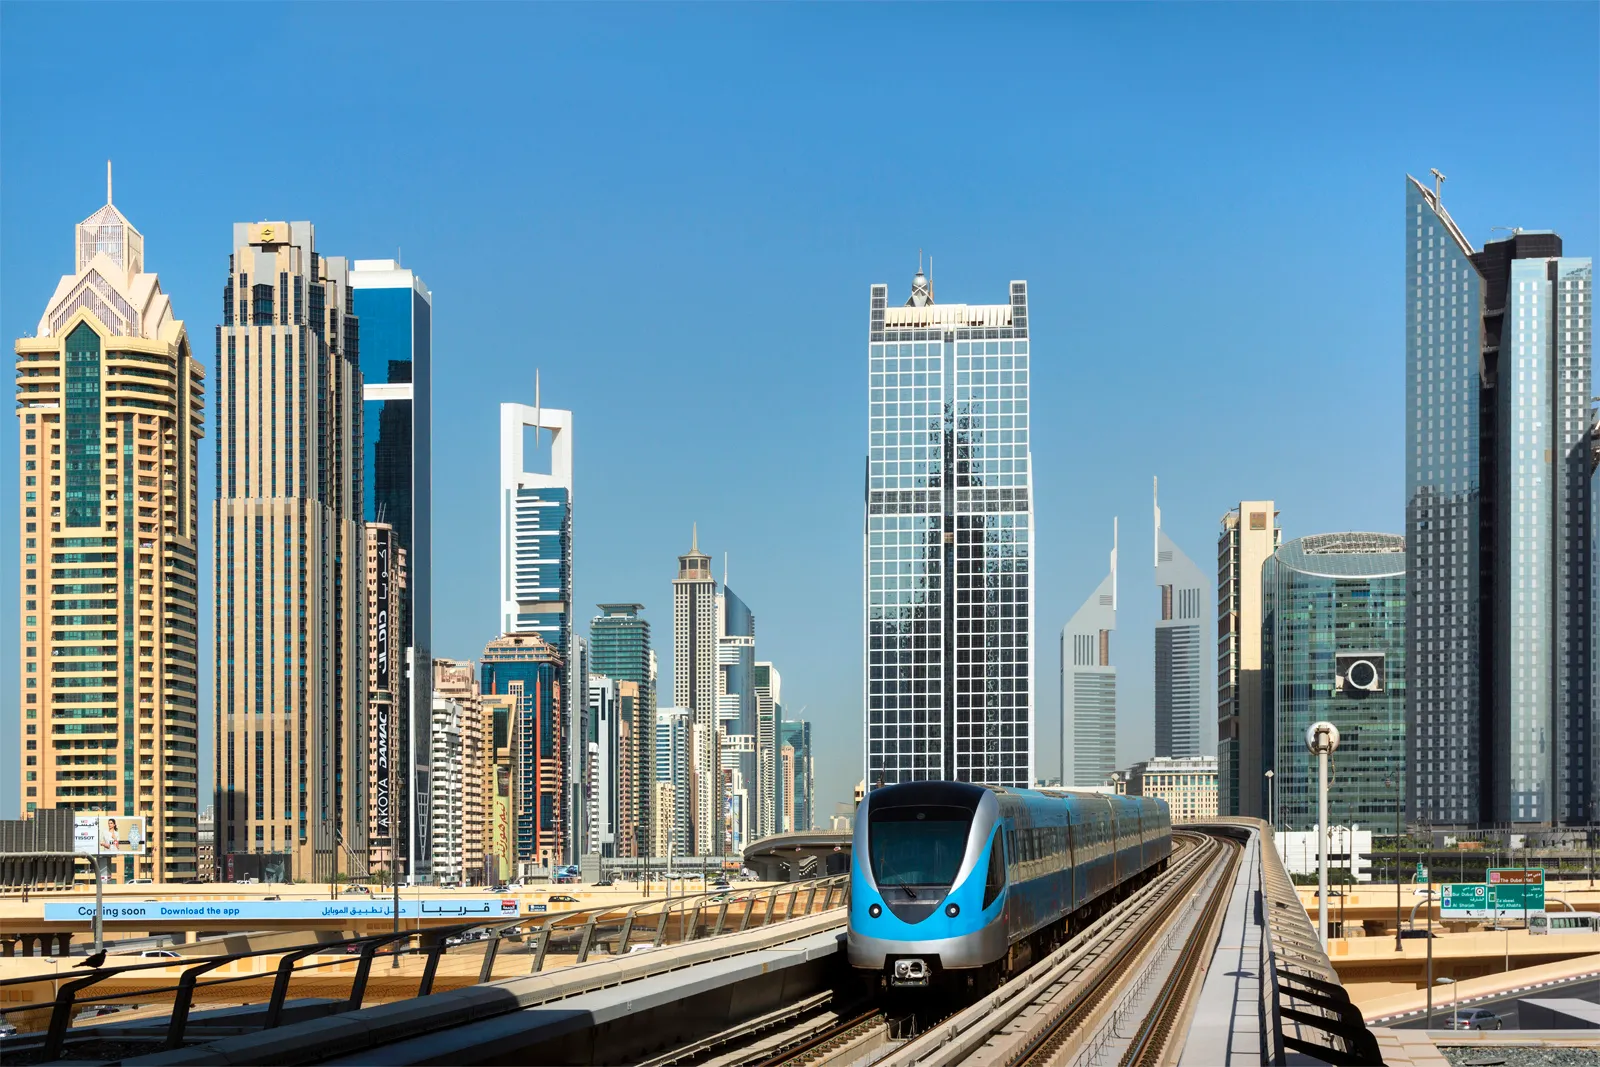 train-first-Dubai-emirate-rapid-transit-line-kind-Sept-10-2009